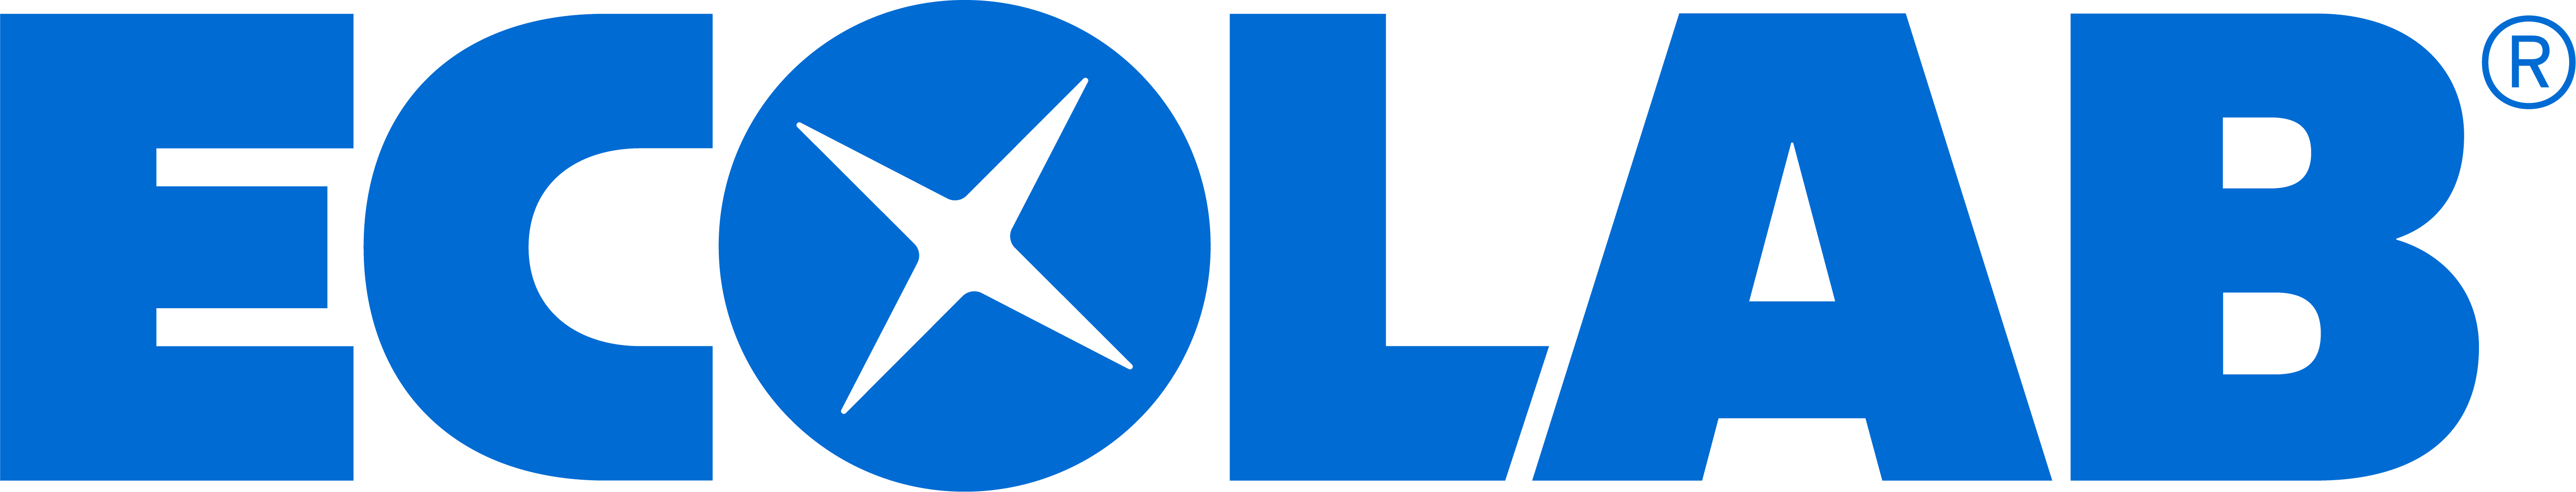 https://sante.ro/wp-content/uploads/2016/03/Ecolab_Logo_Blue_RGB-1-e1669026326355.png